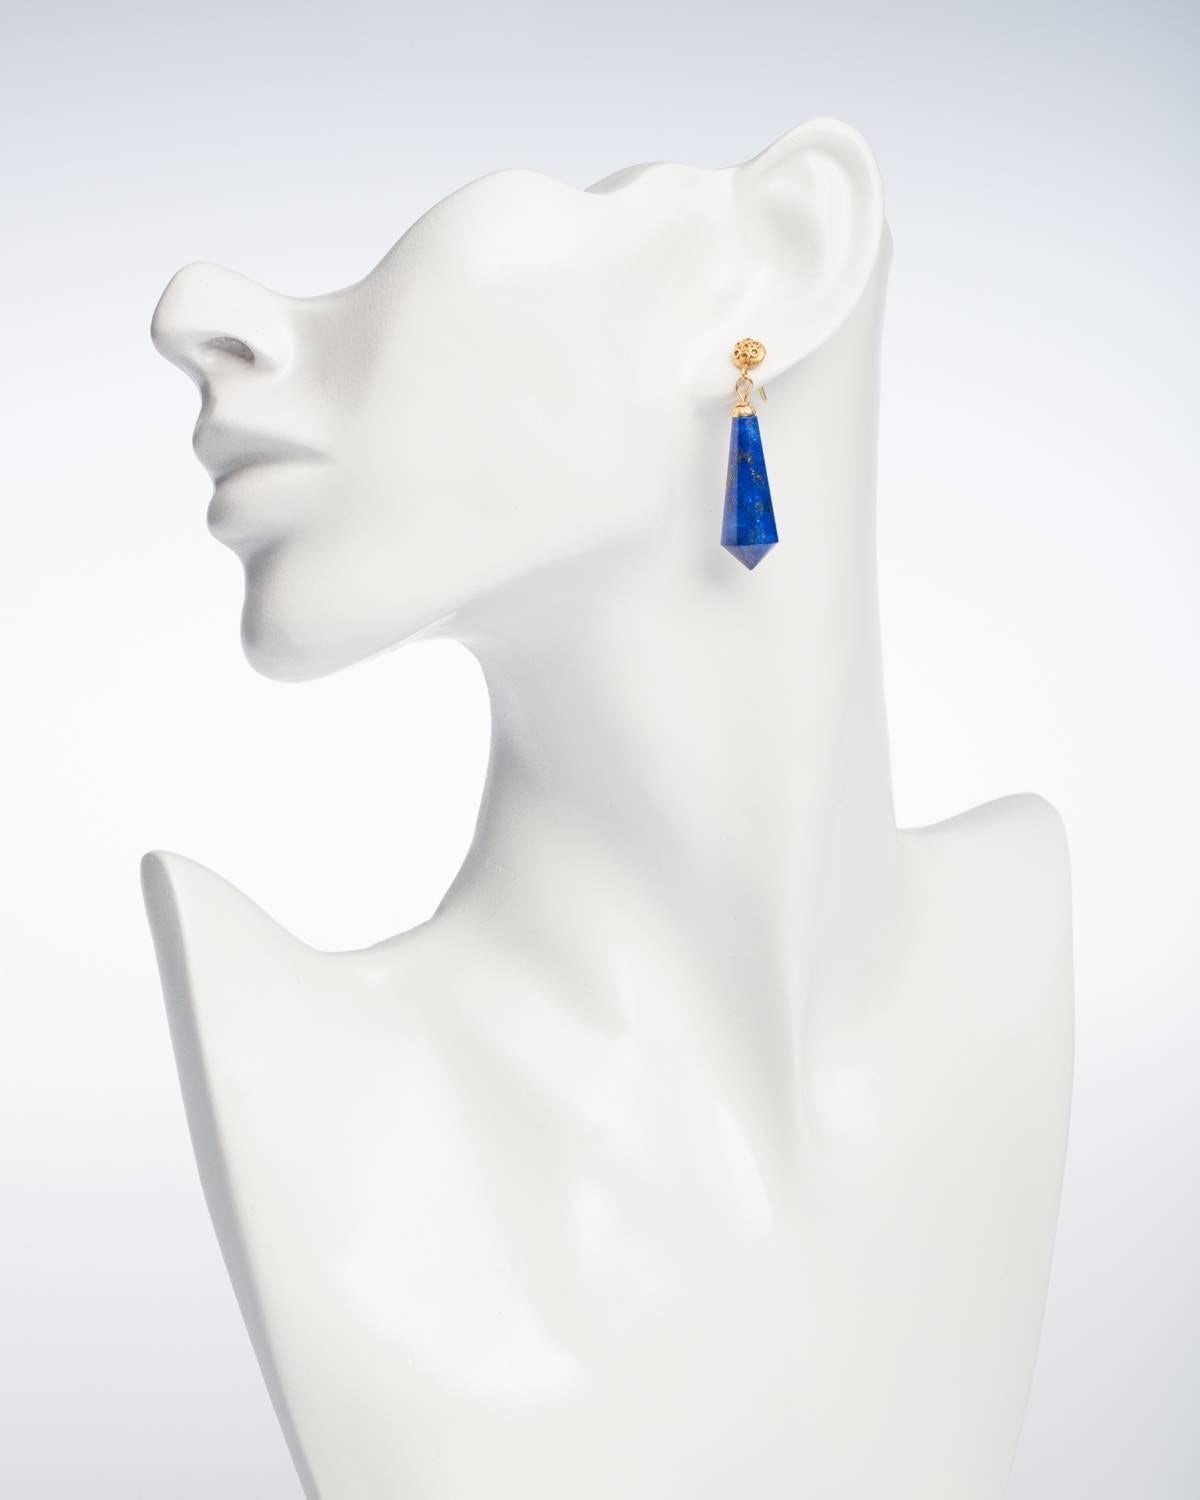 Contemporary Lapis Lazuli and 22 Karat Gold Earrings